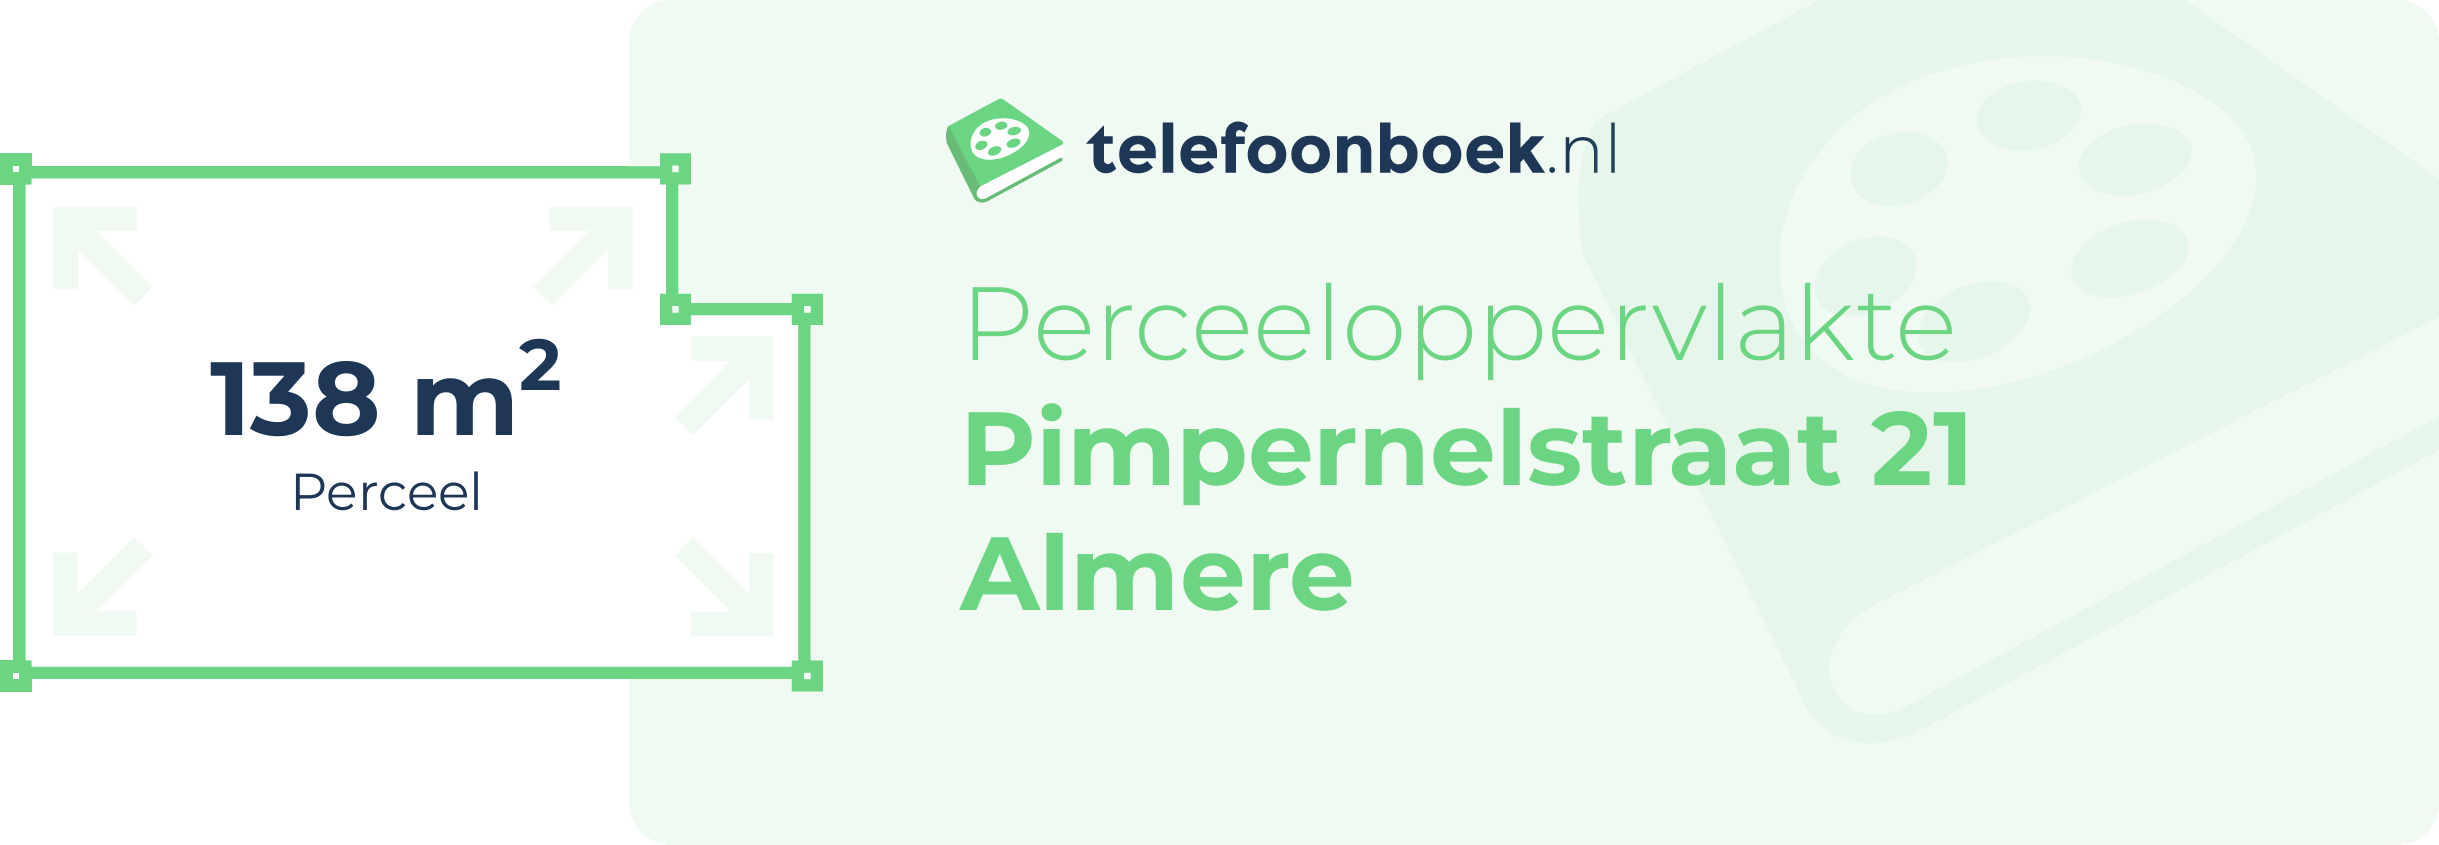 Perceeloppervlakte Pimpernelstraat 21 Almere